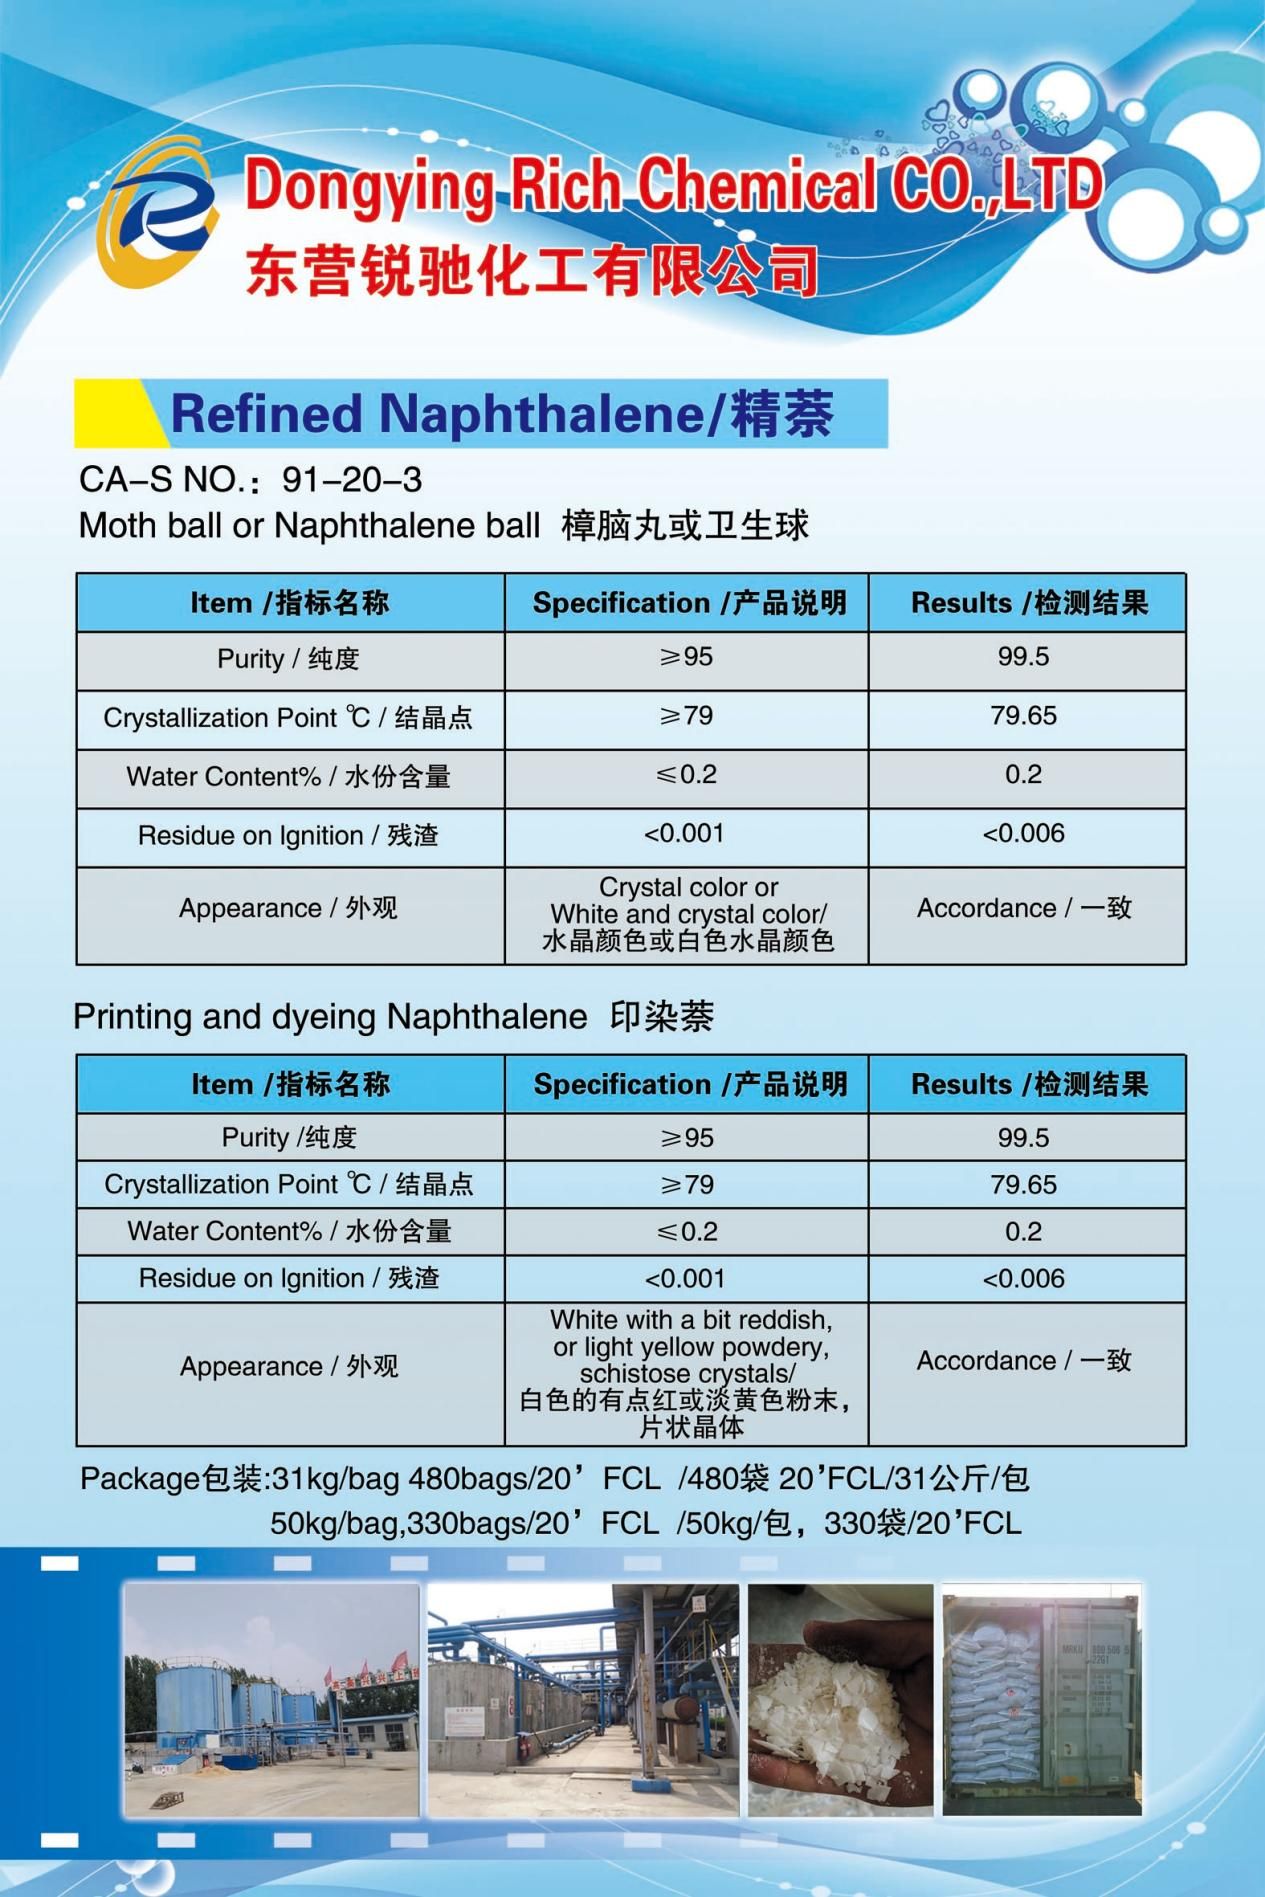 Refined Naphthalene (3)